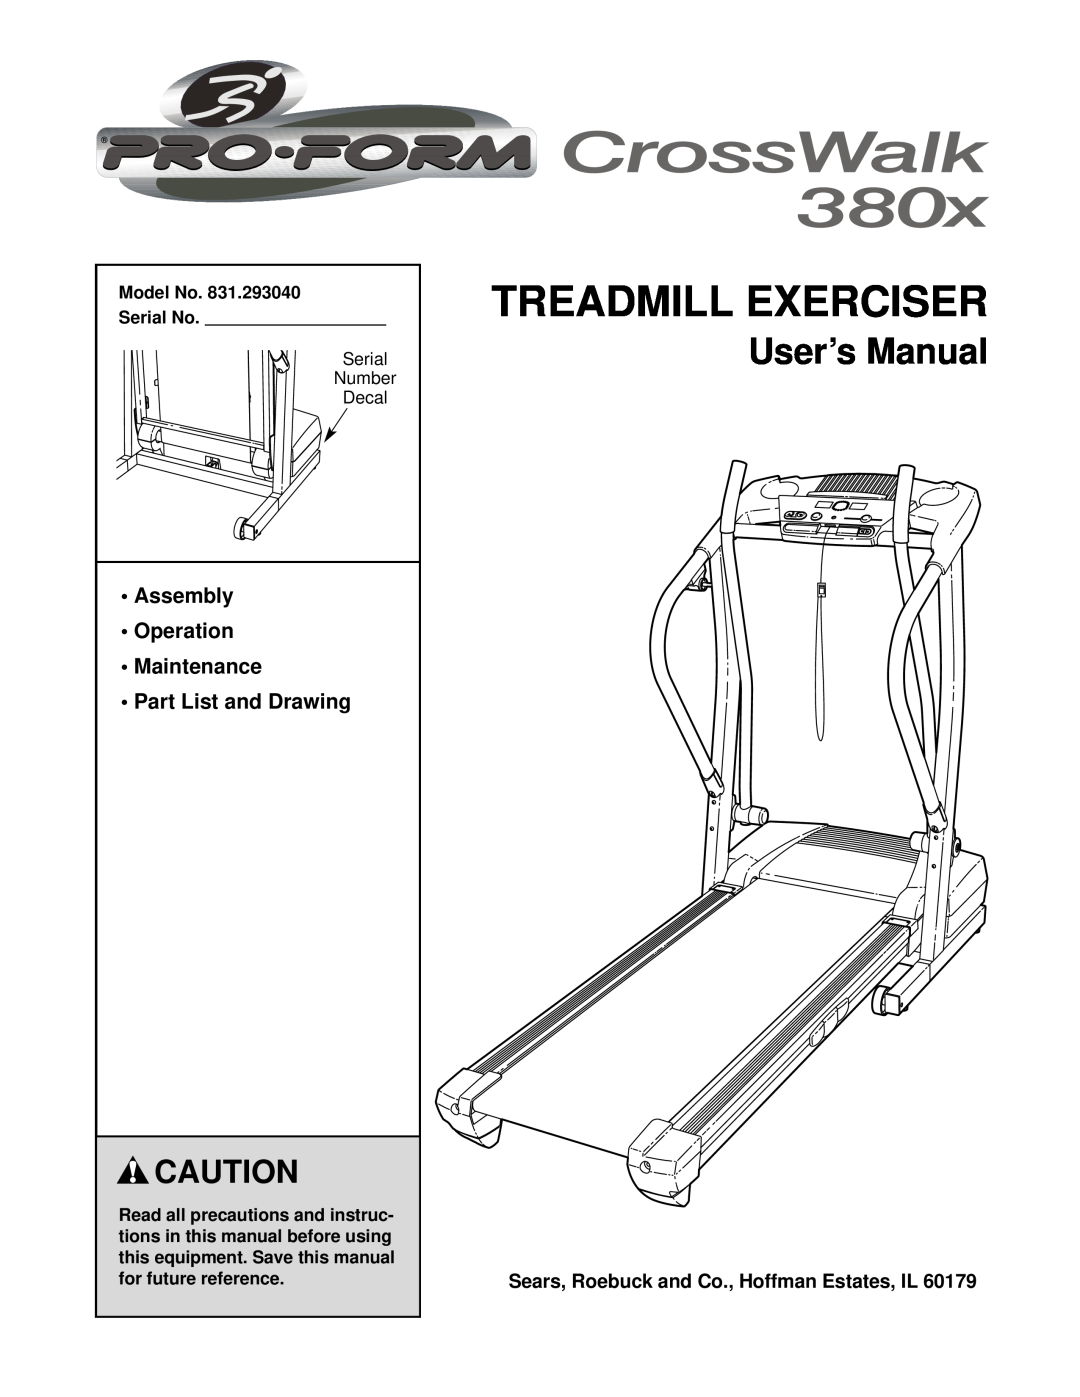 ProForm 831.293040 user manual Model No Serial No, Treadmill Exerciser, User’s Manual 